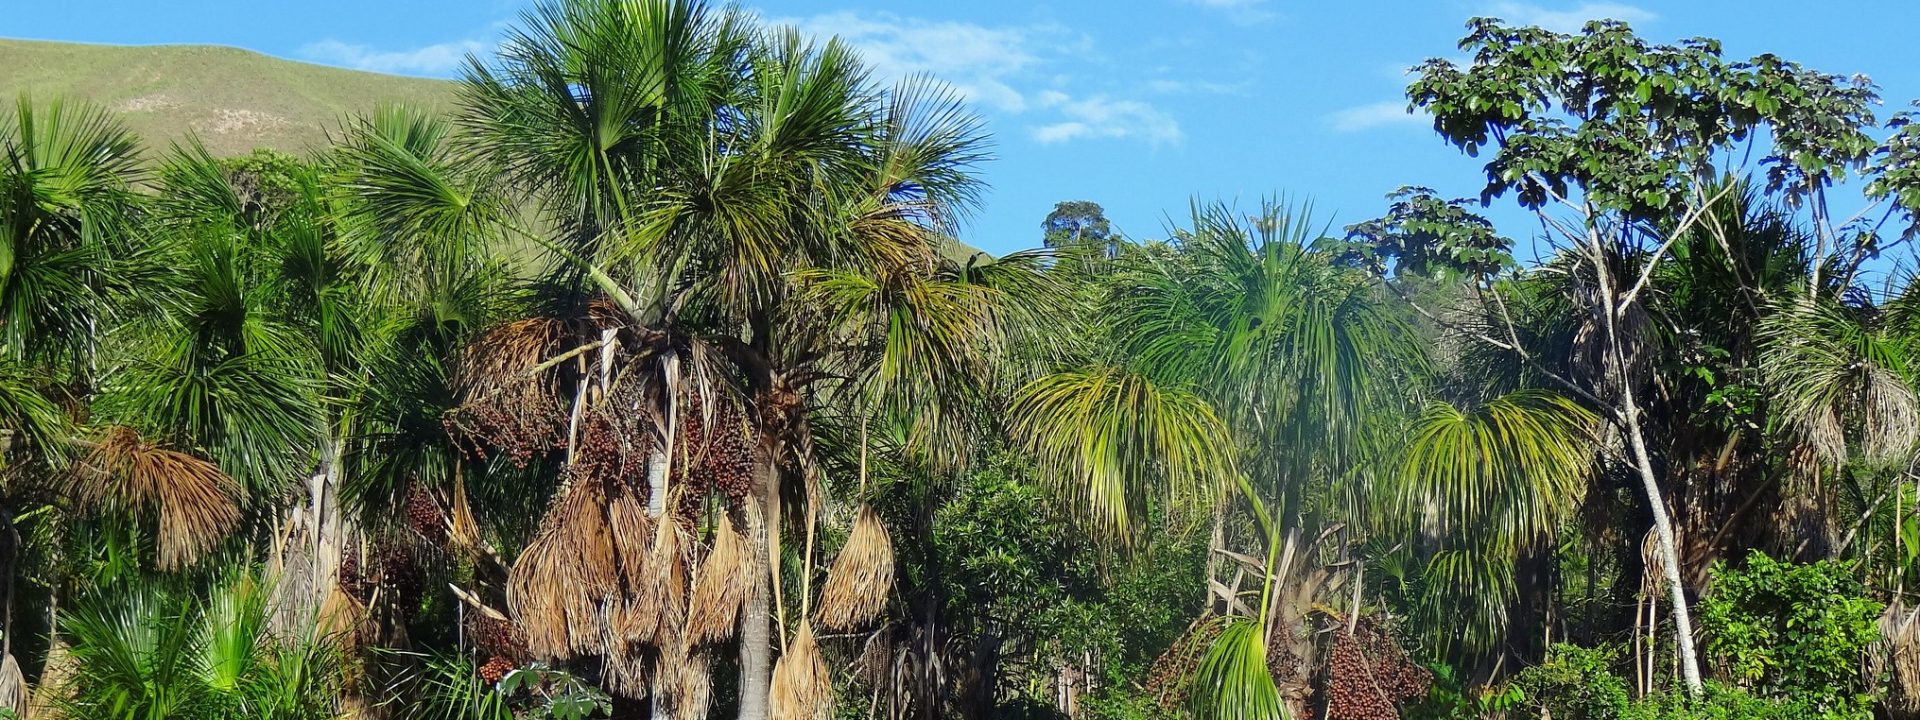 The solidarity of a palm tree called Buruti